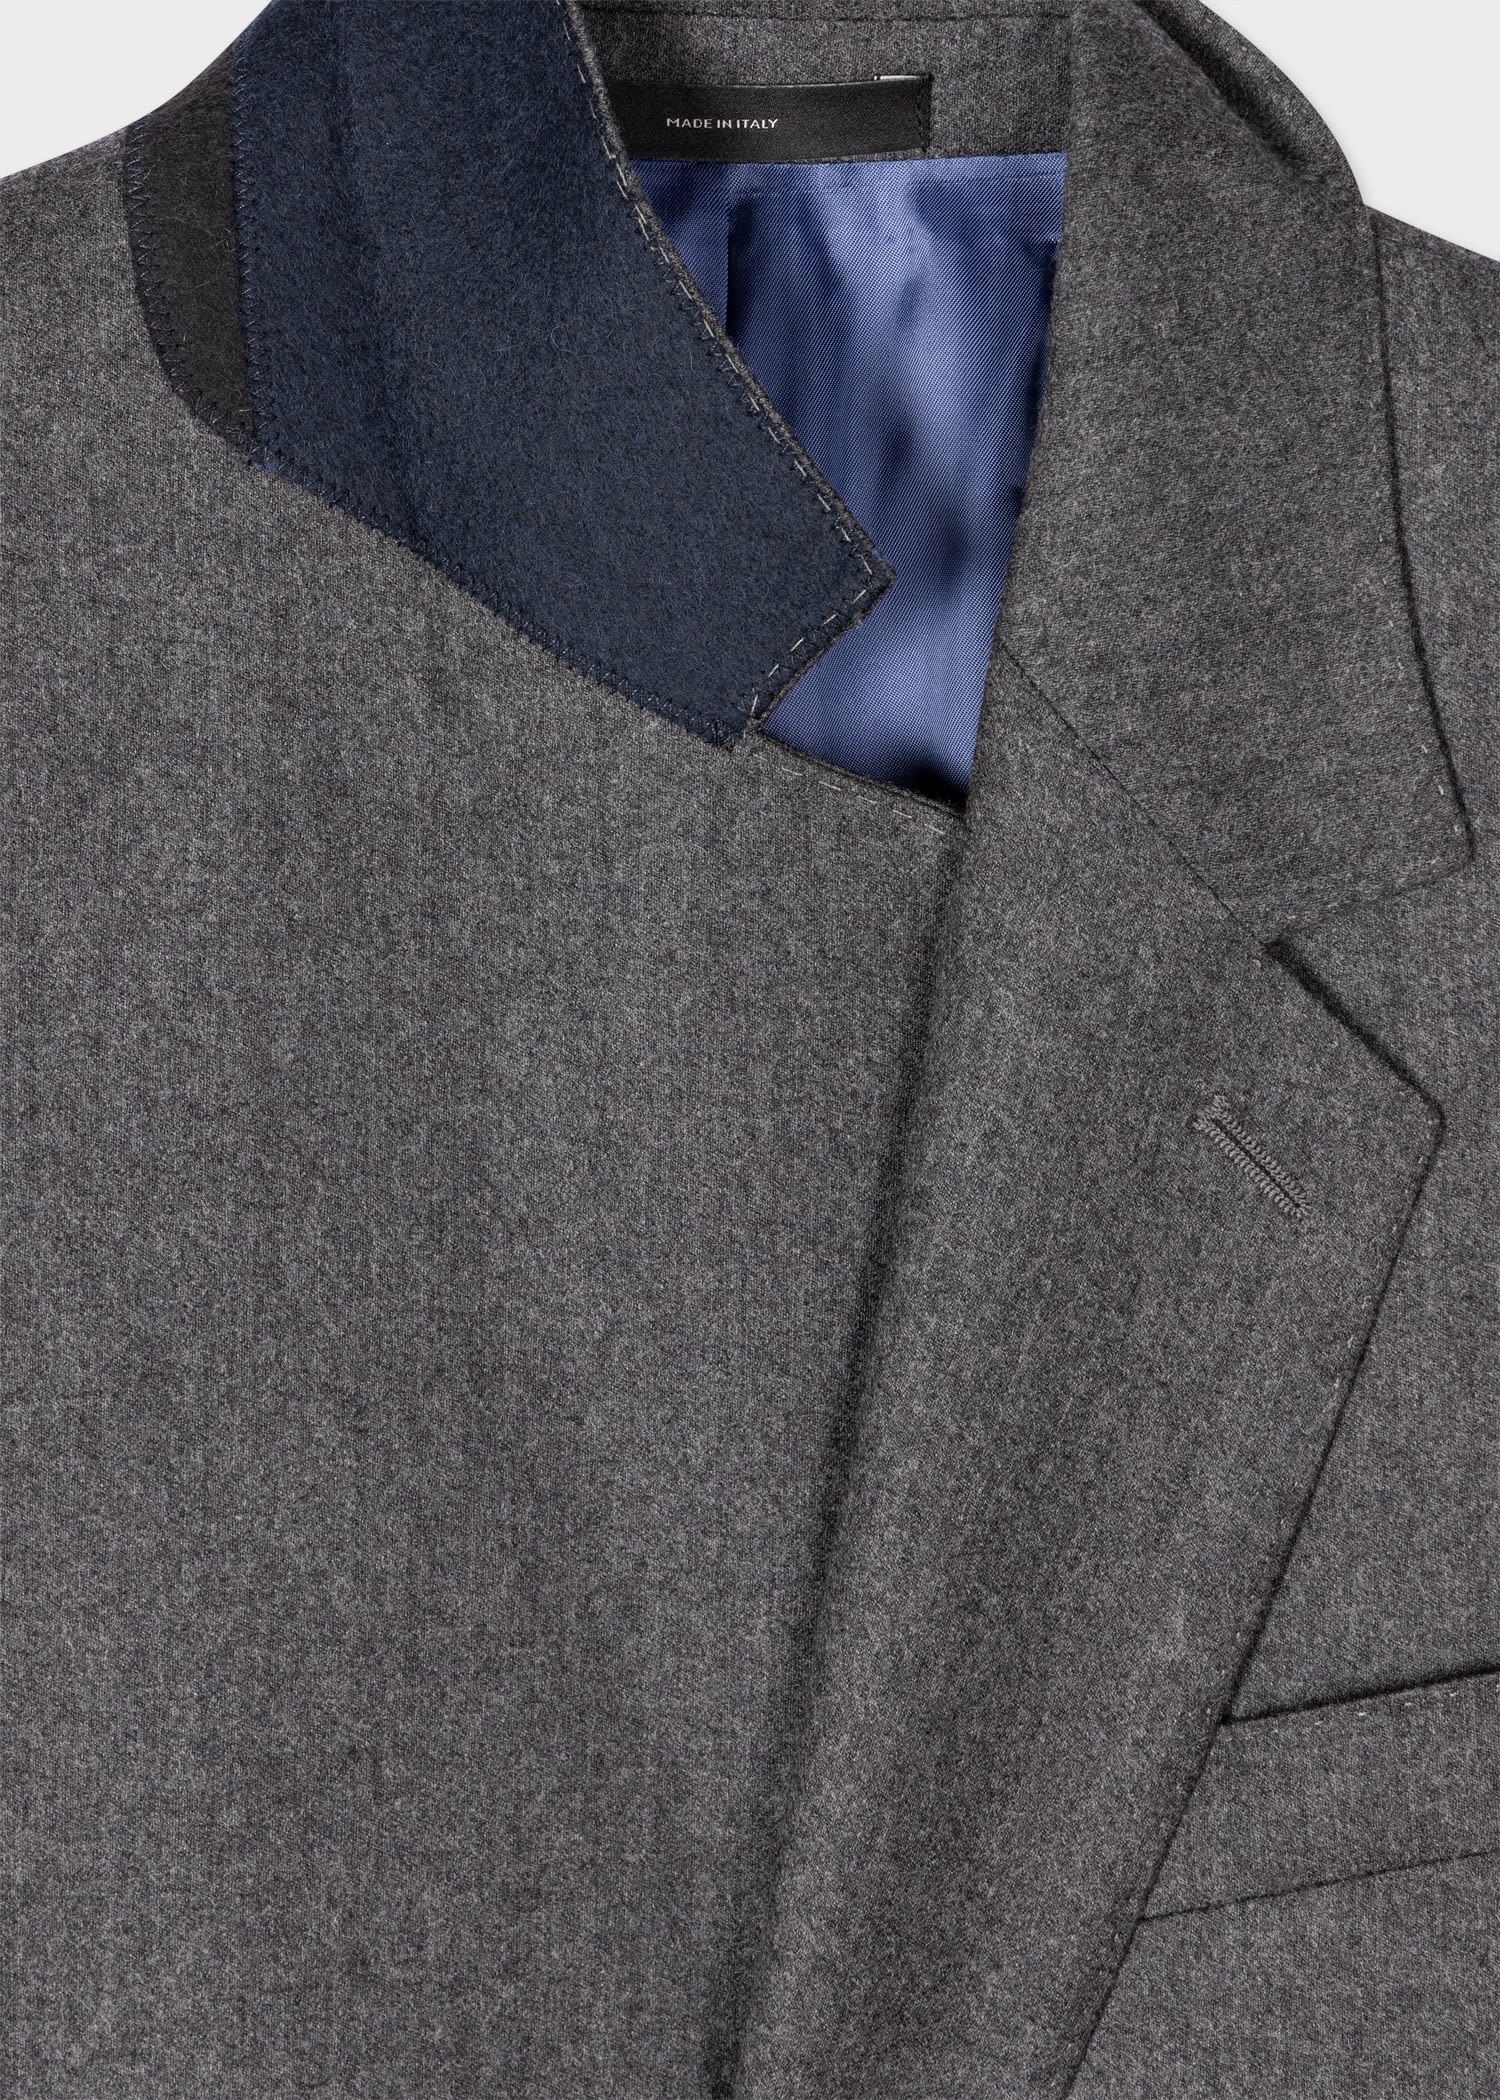 Wool-Cashmere Suit - 4